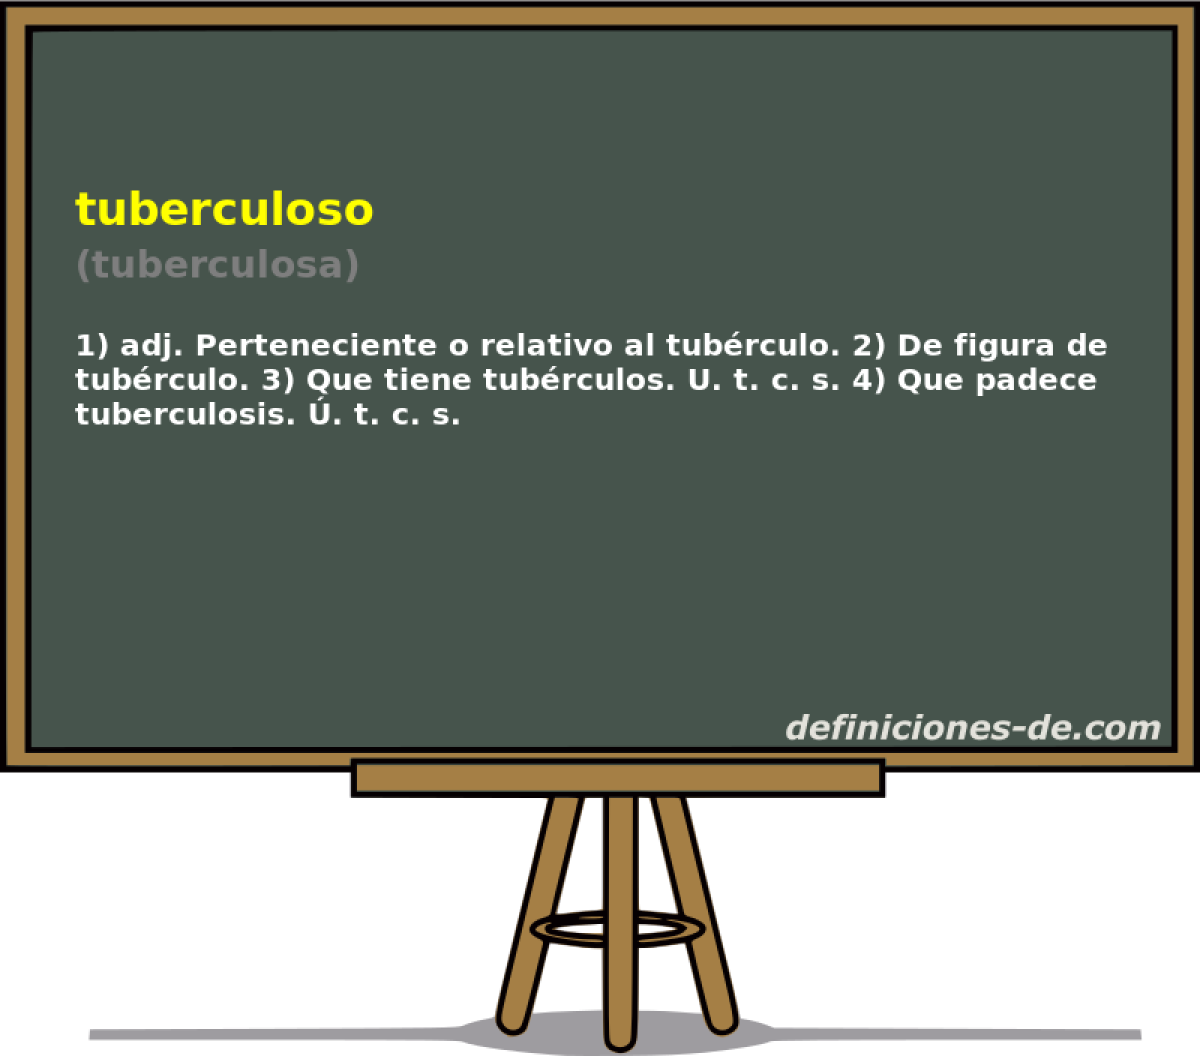 tuberculoso (tuberculosa)